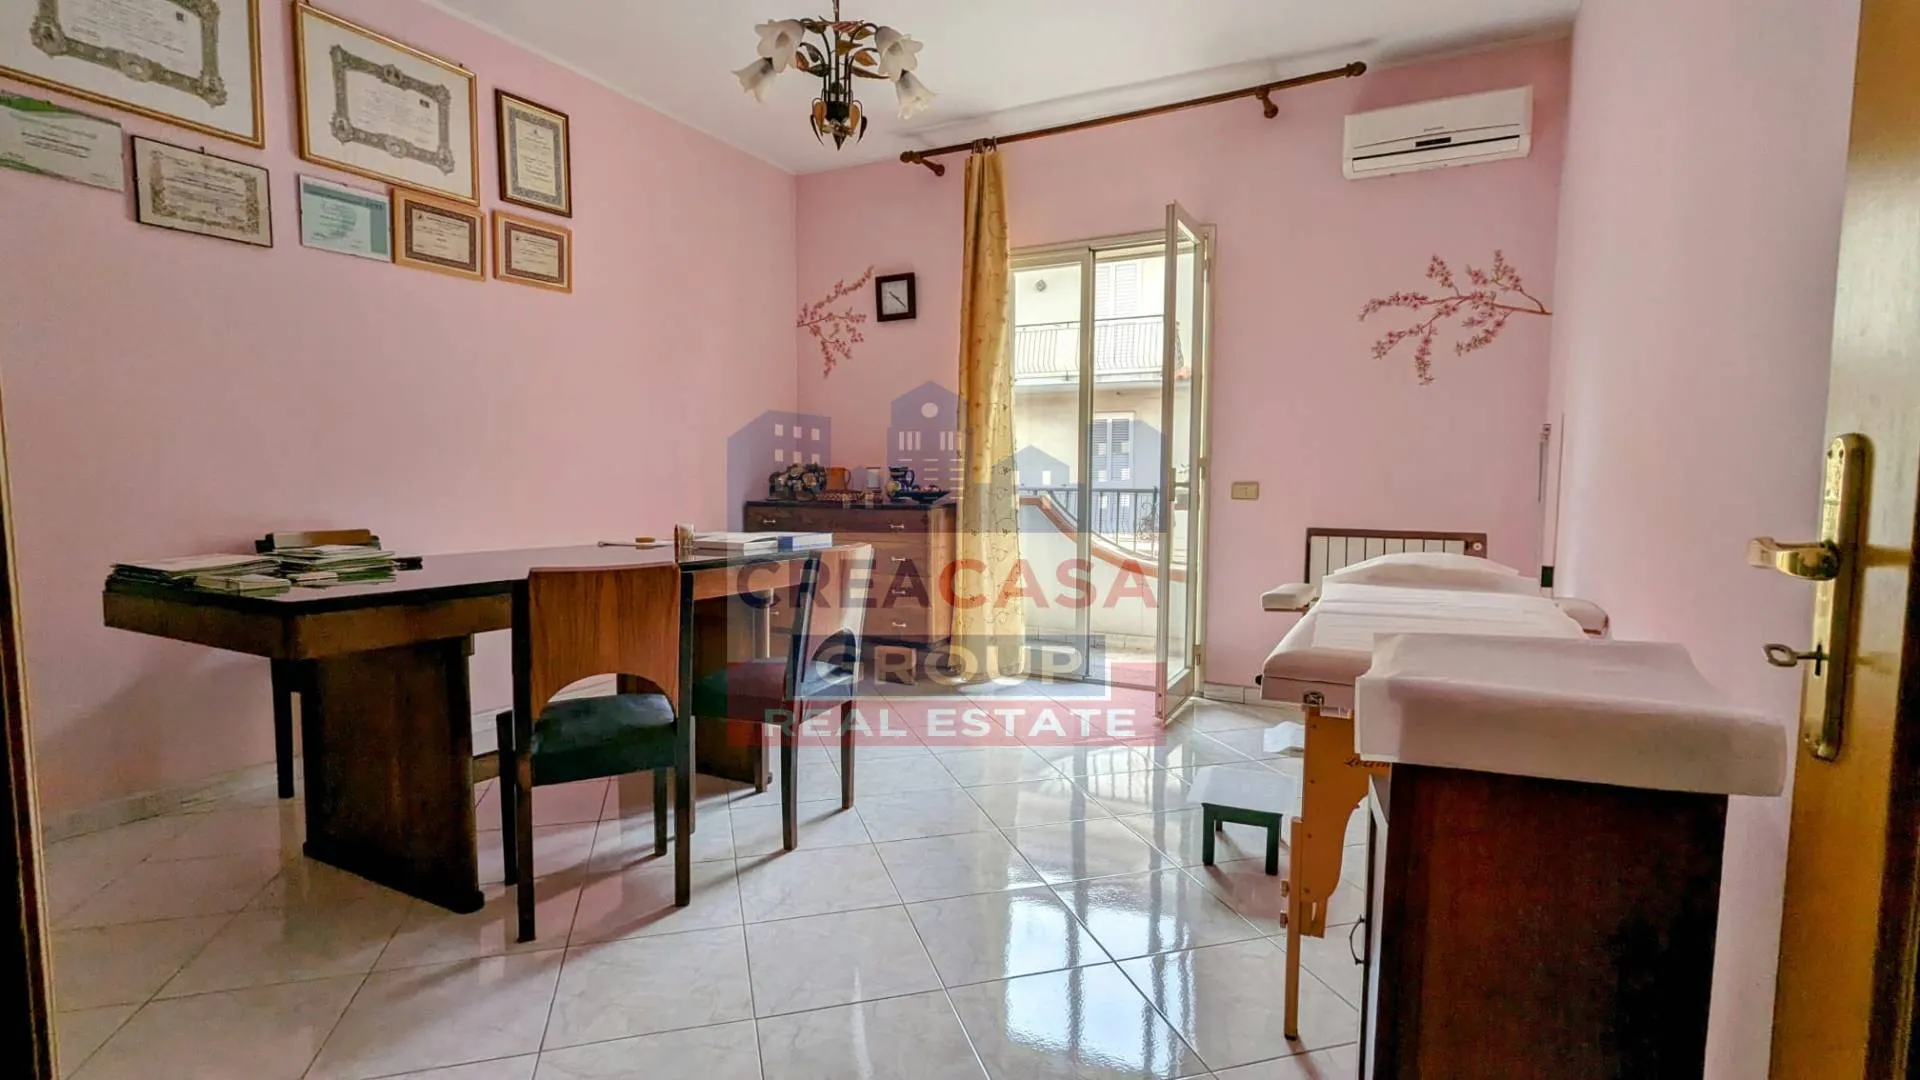 Immagine per Appartamento in vendita a Taormina via Francavilla